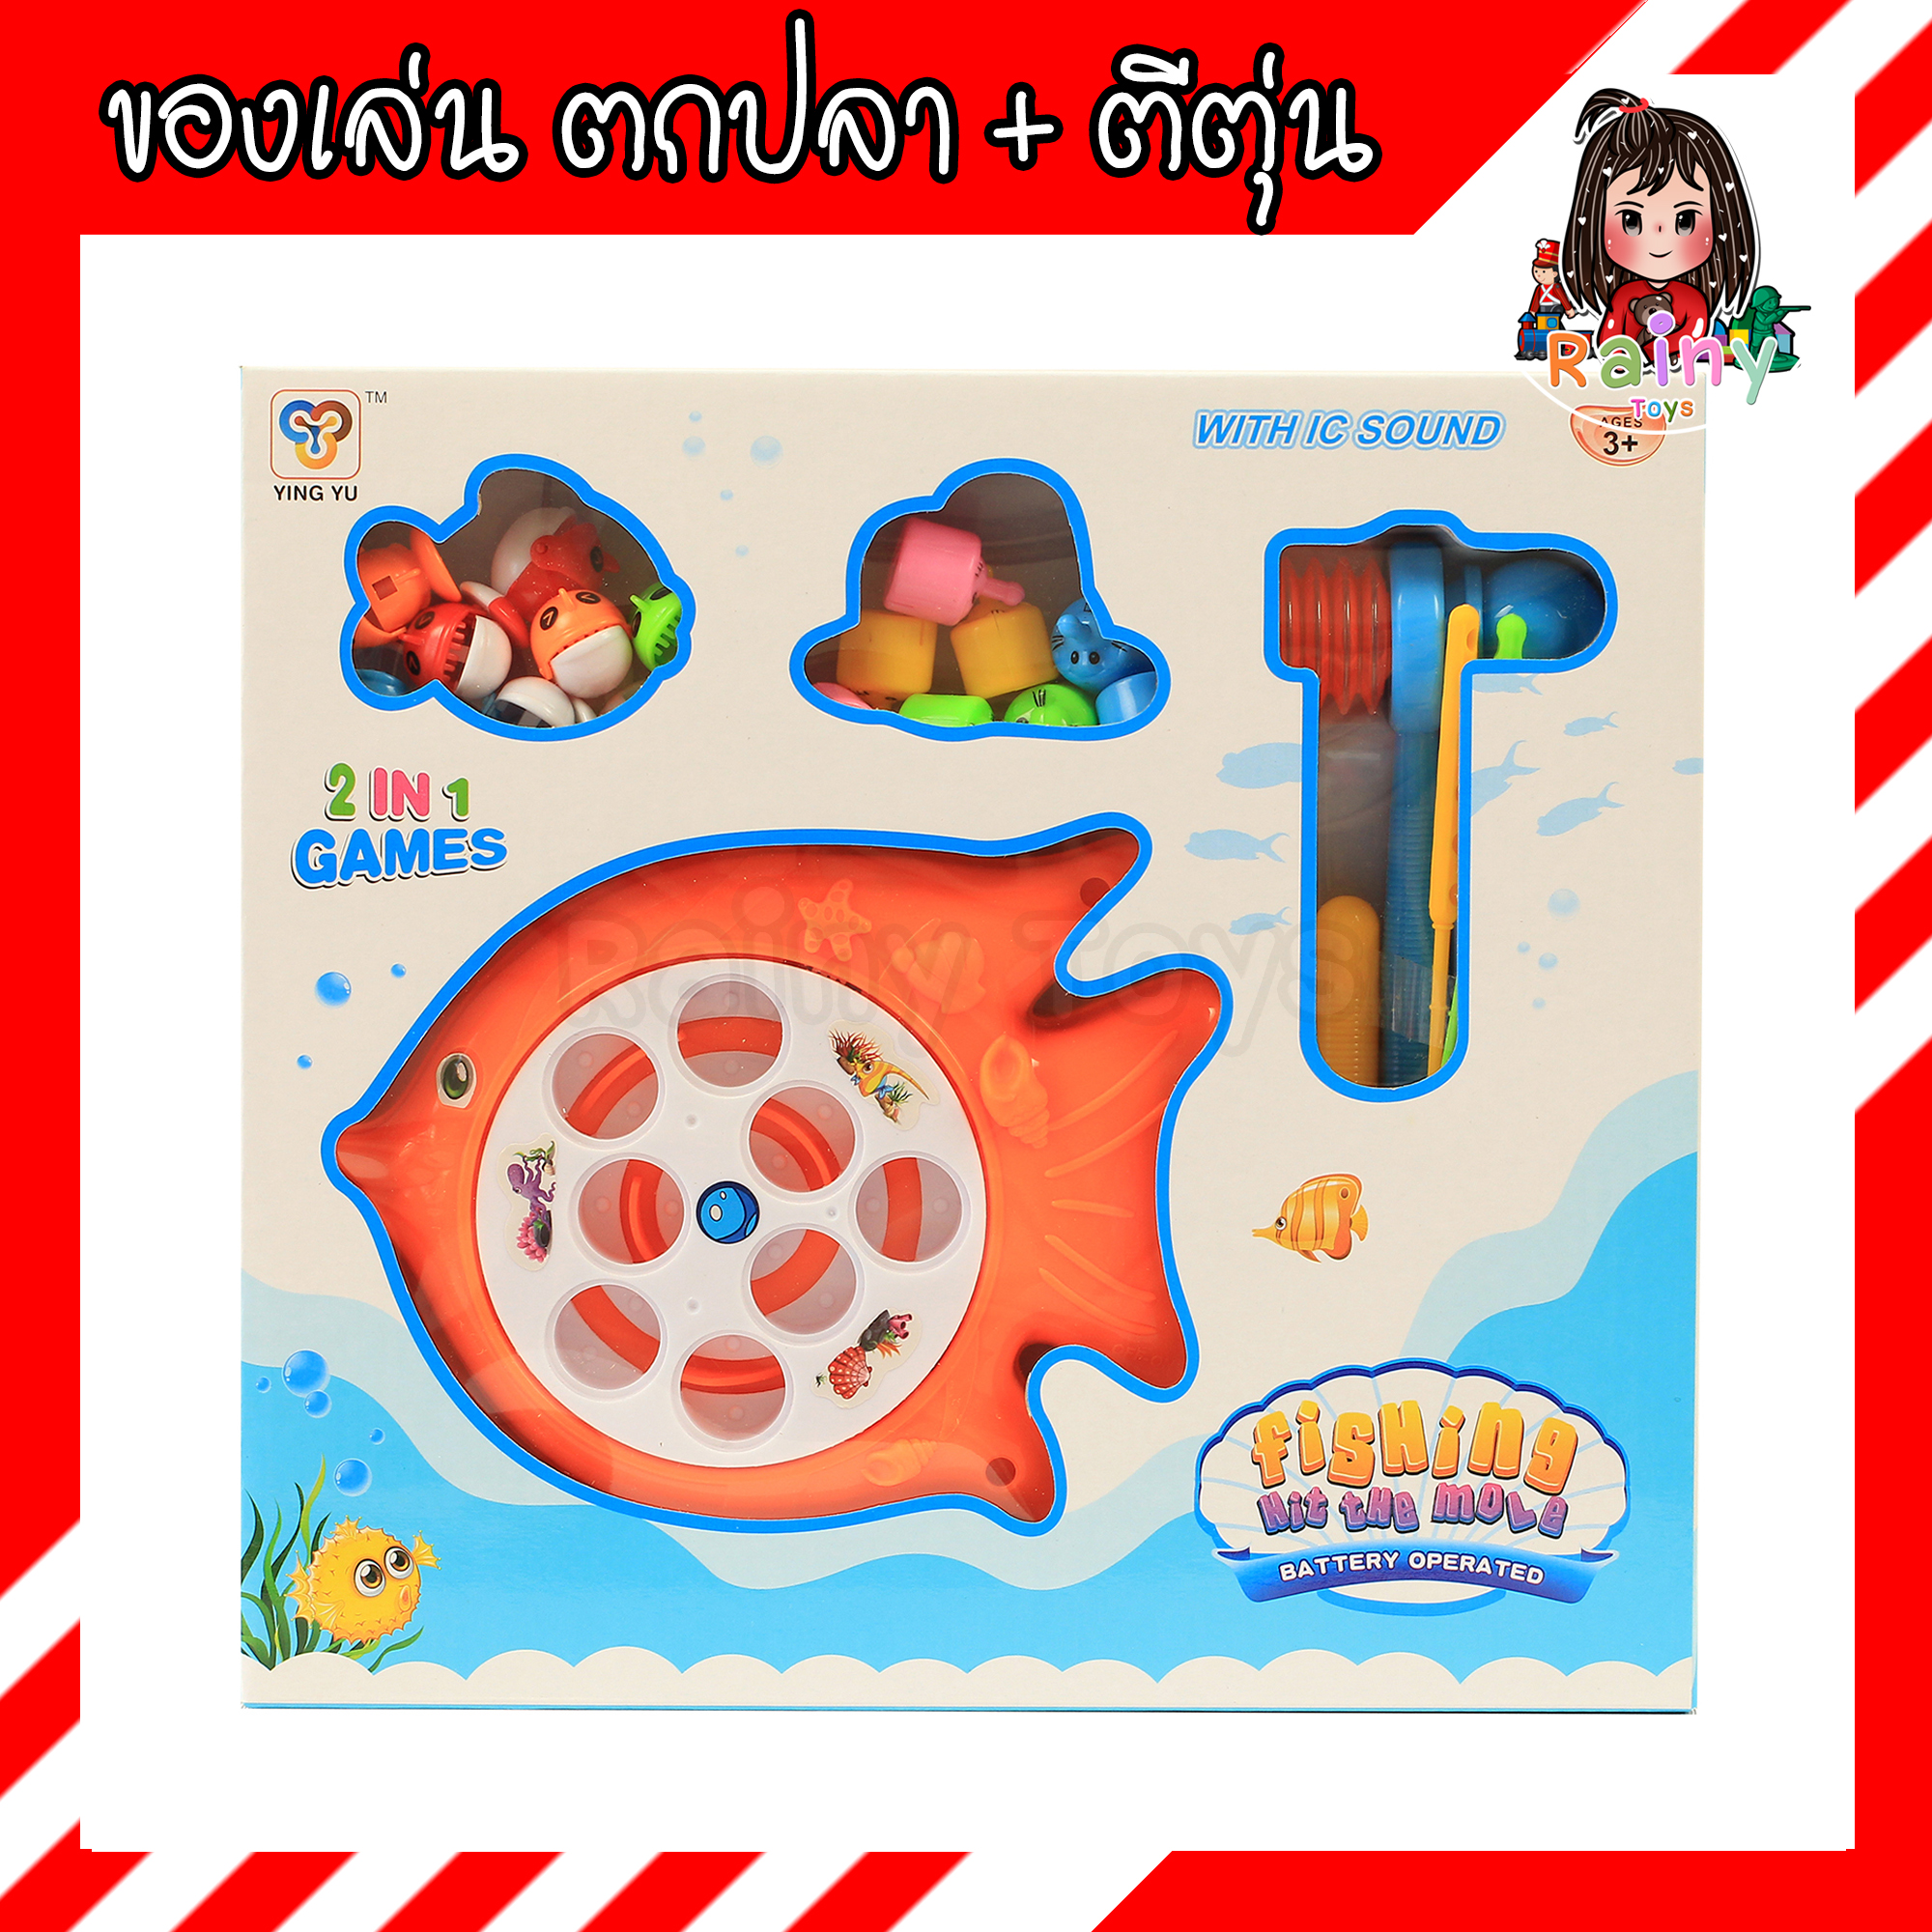 Rainy Toys ของเล่นเด็ก 2 in 1 ของเล่นตกปลา + ของเล่นตีตัวตุ่น สีส้ม มี มอก. ของเล่นทุบ เกมส์ทุบ ของเล่นตีตุ่น ของเล่นทุบตุ่น เกมส์ทุบตัวตุ่น เกมทุบตัวตุ่น เบ็ดตกปลาของเล่น เกมส์ตกปลา เกมตกปลา เบ็ดตกปลาเด็ก เกมครอบครัว เกมส์ครอบครัว ของเล่นครอบครัว